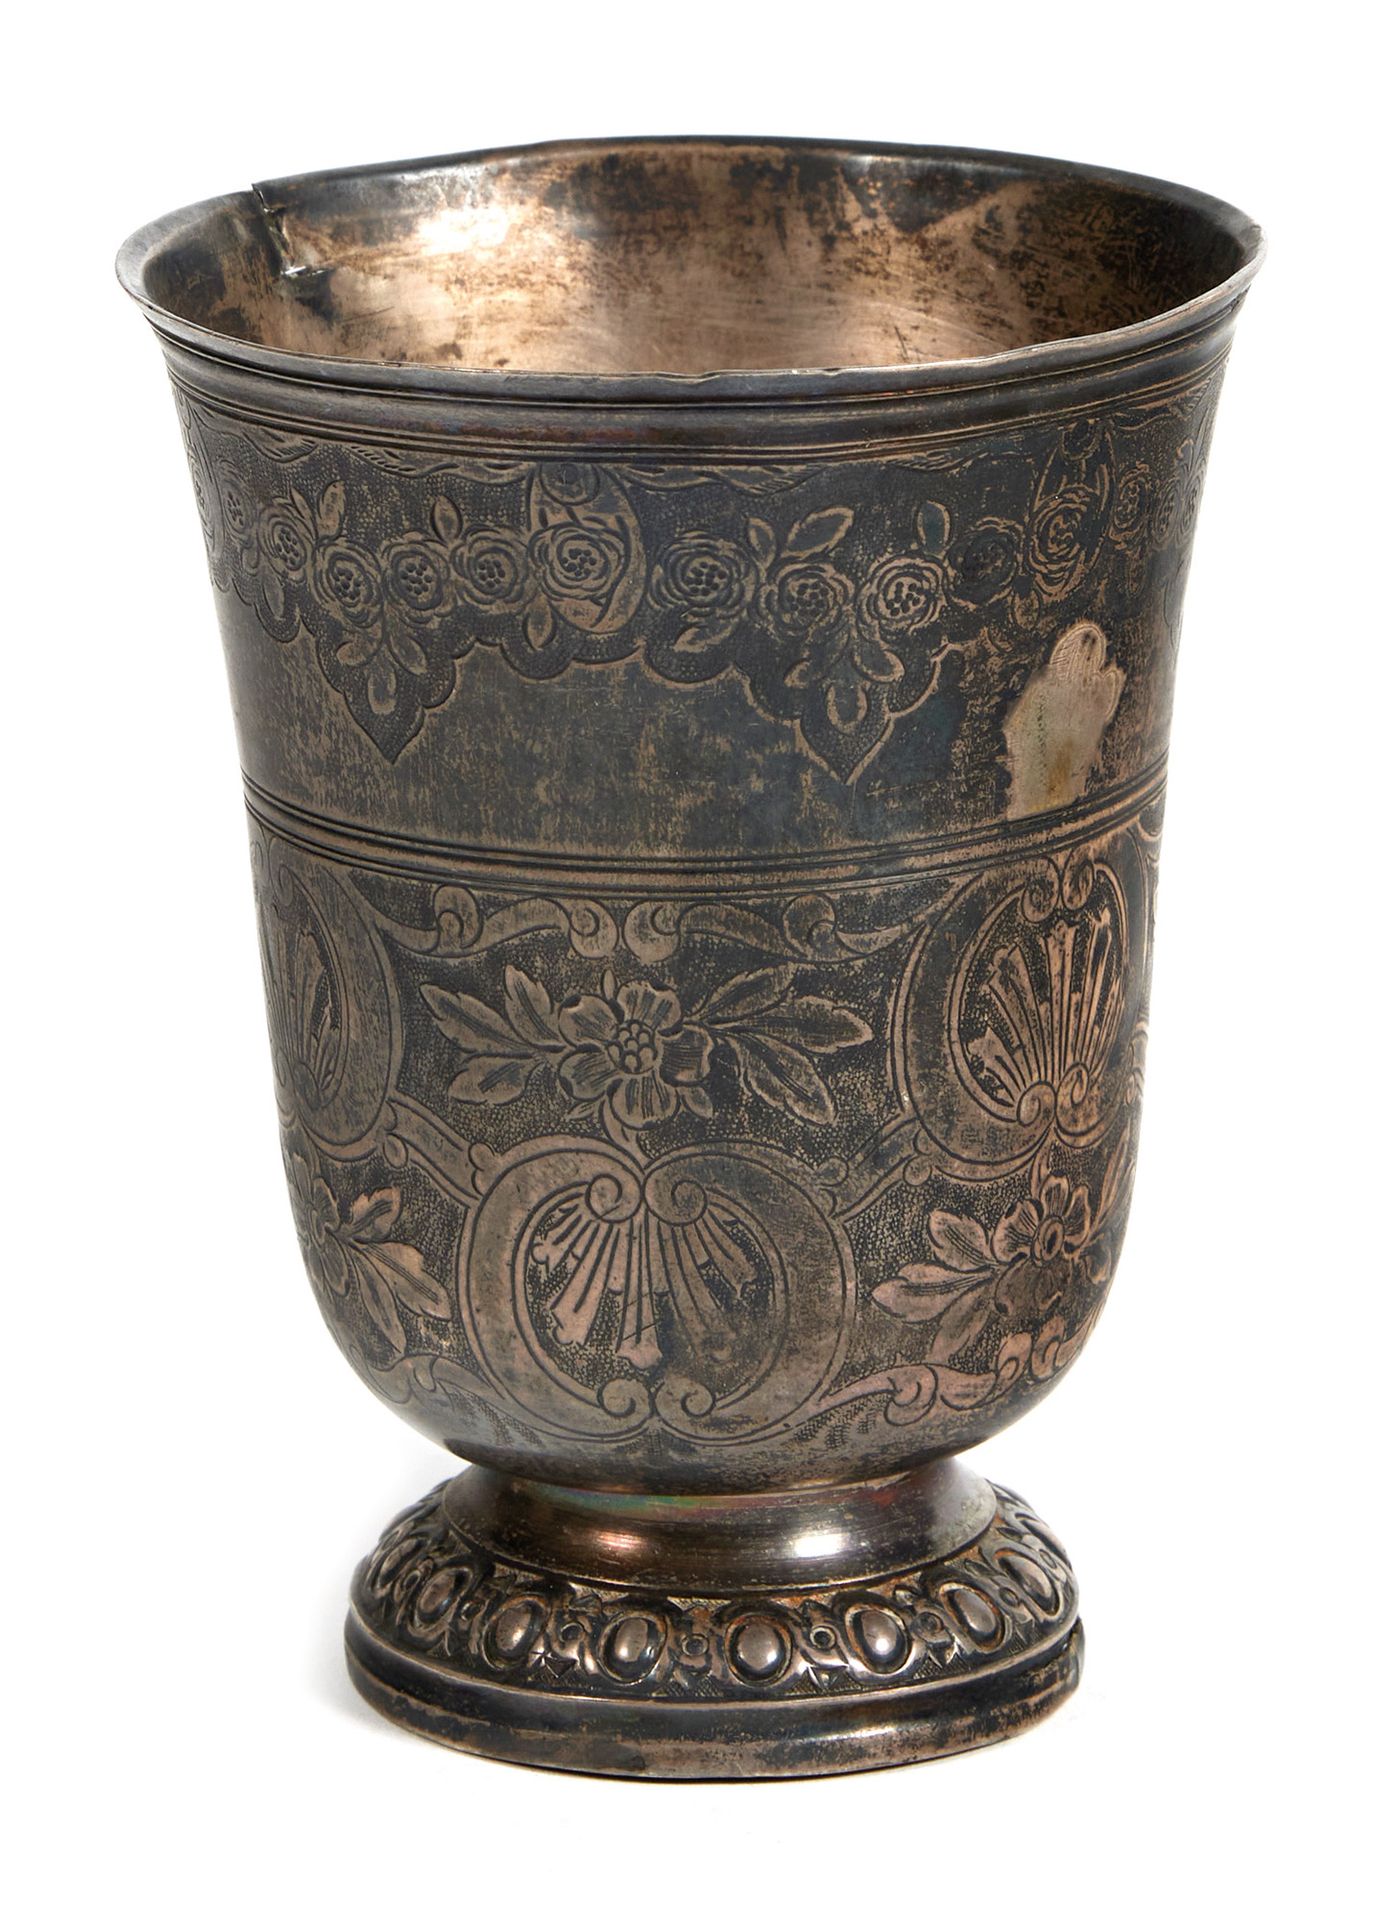 TIMBALE TULIPE EN ARGENT 银色的郁金香杯

巴黎，1750年，部分可辨认的大师级镀金者

底座上有一个椭圆形的边框，刻有rocaille&hellip;